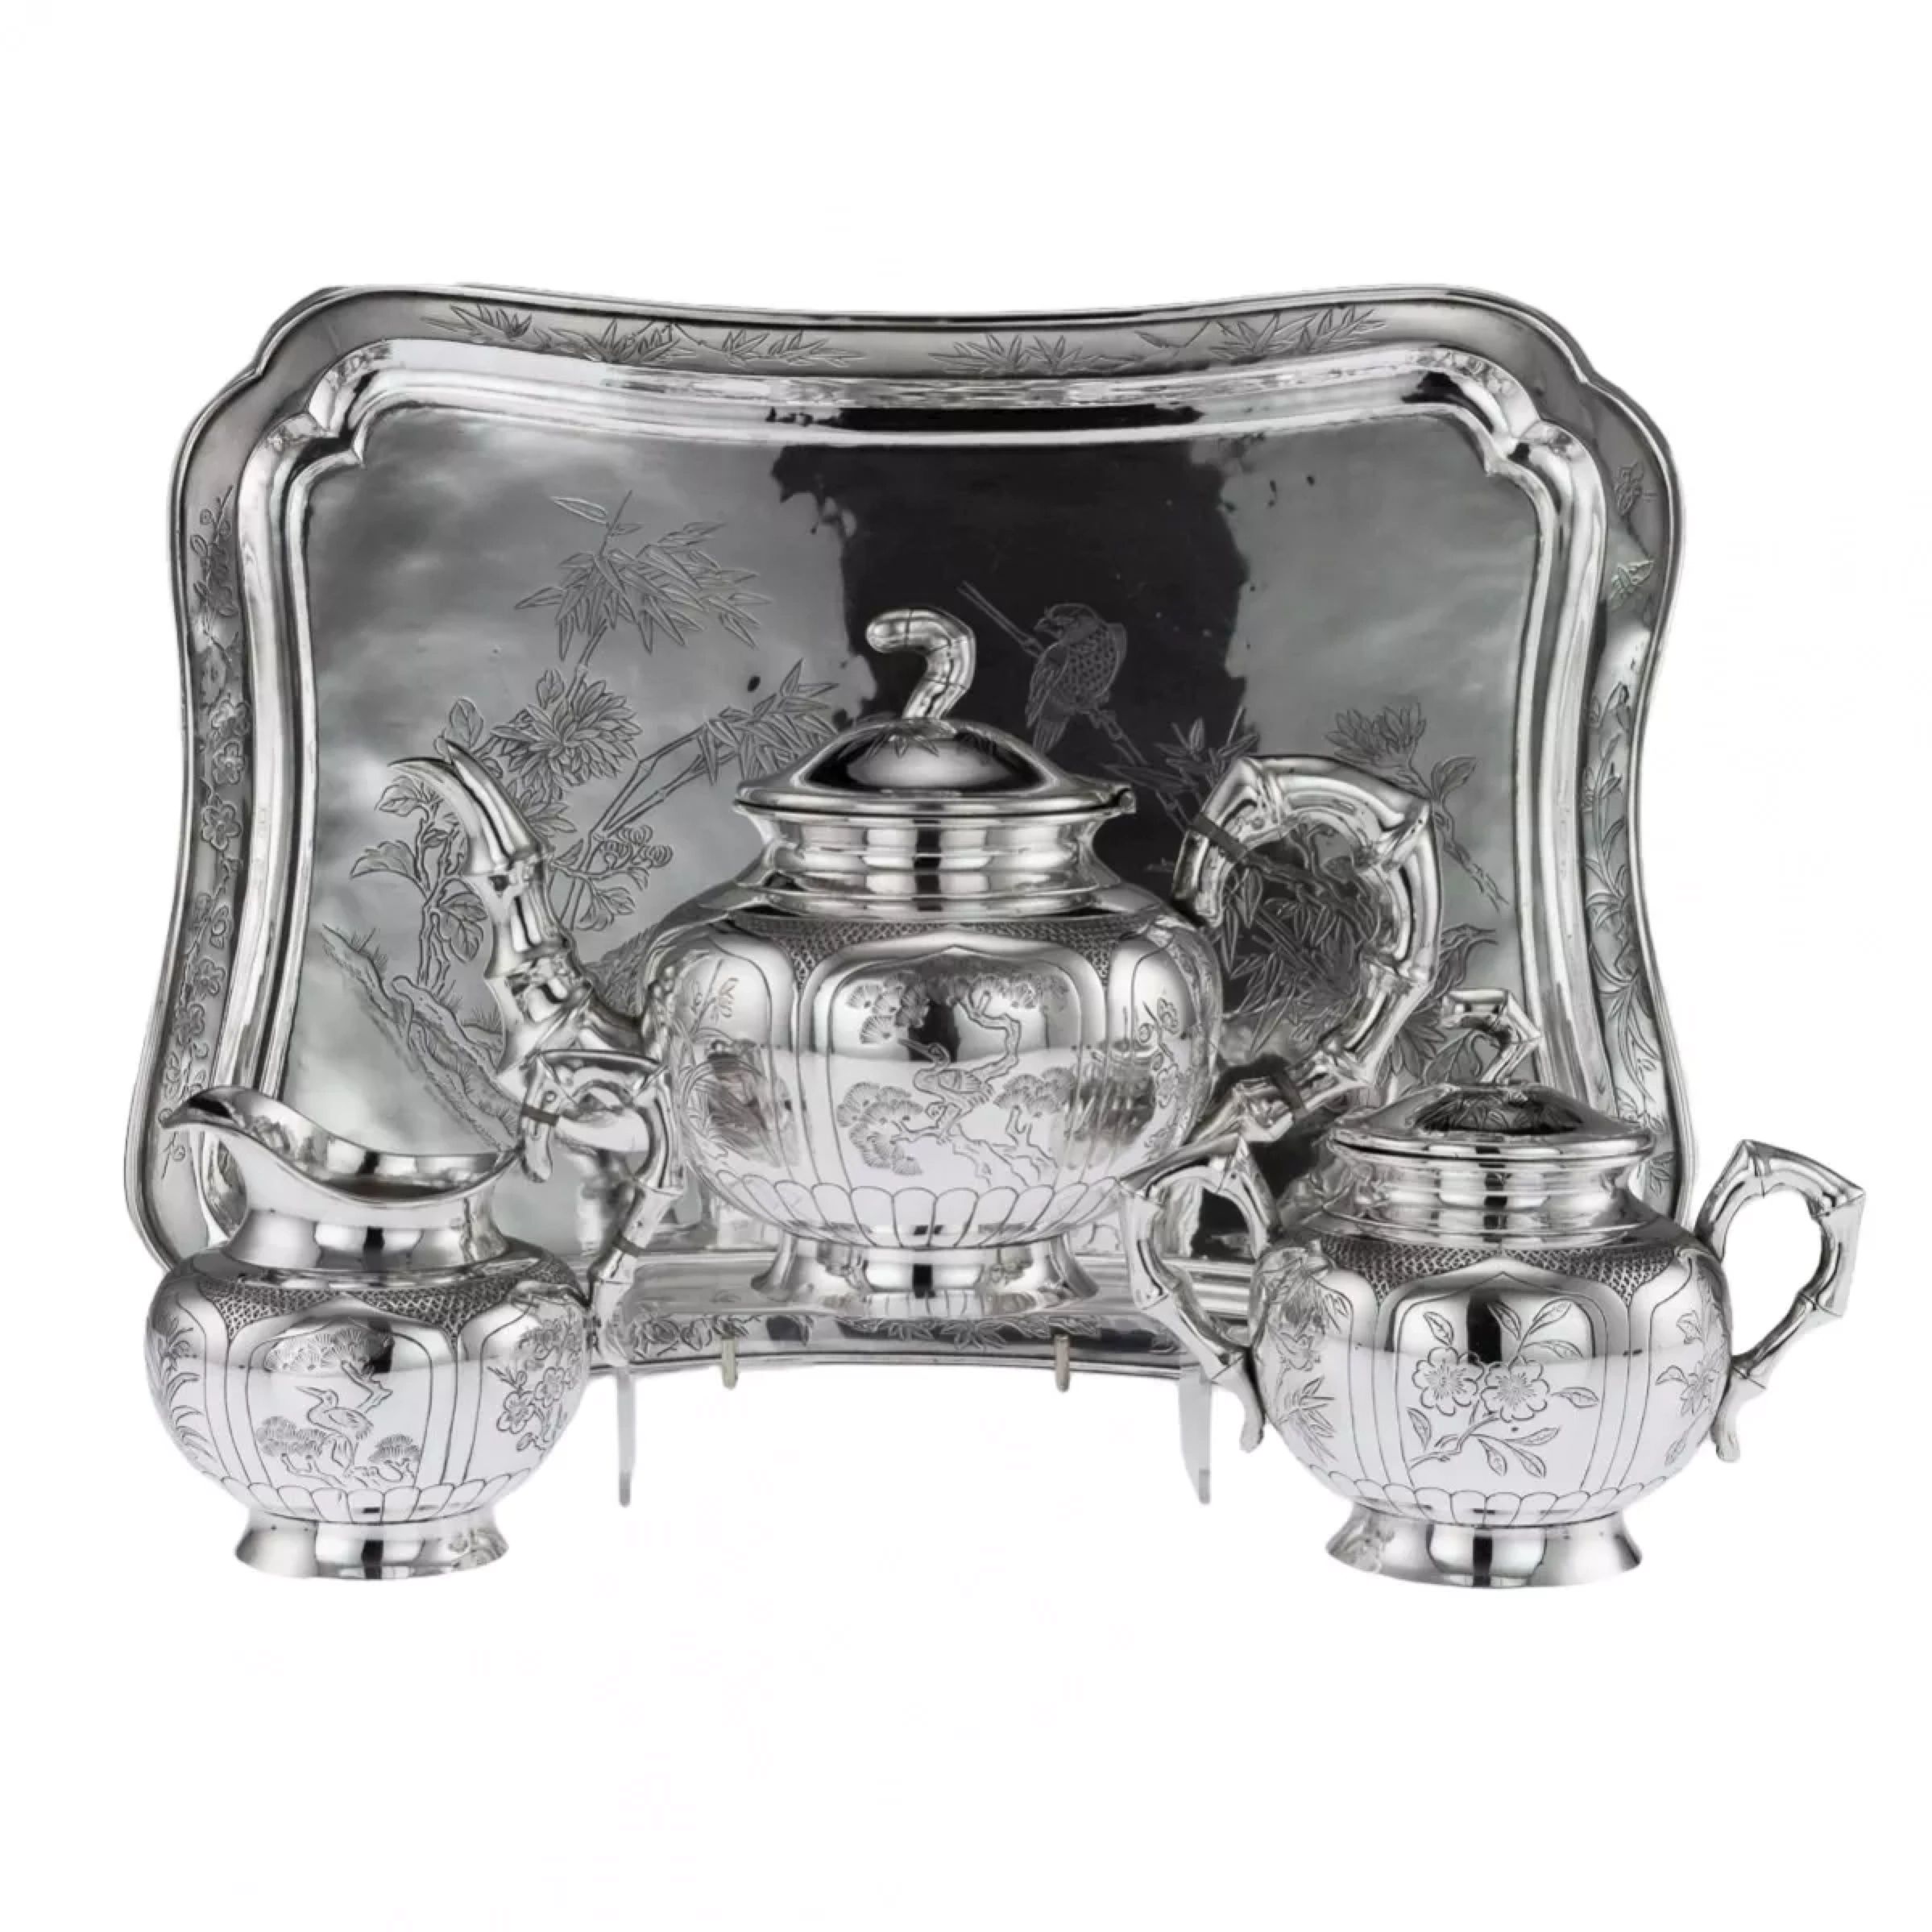 Impressive-silver-tea-service-on-a-tray-China-early-20th-century-